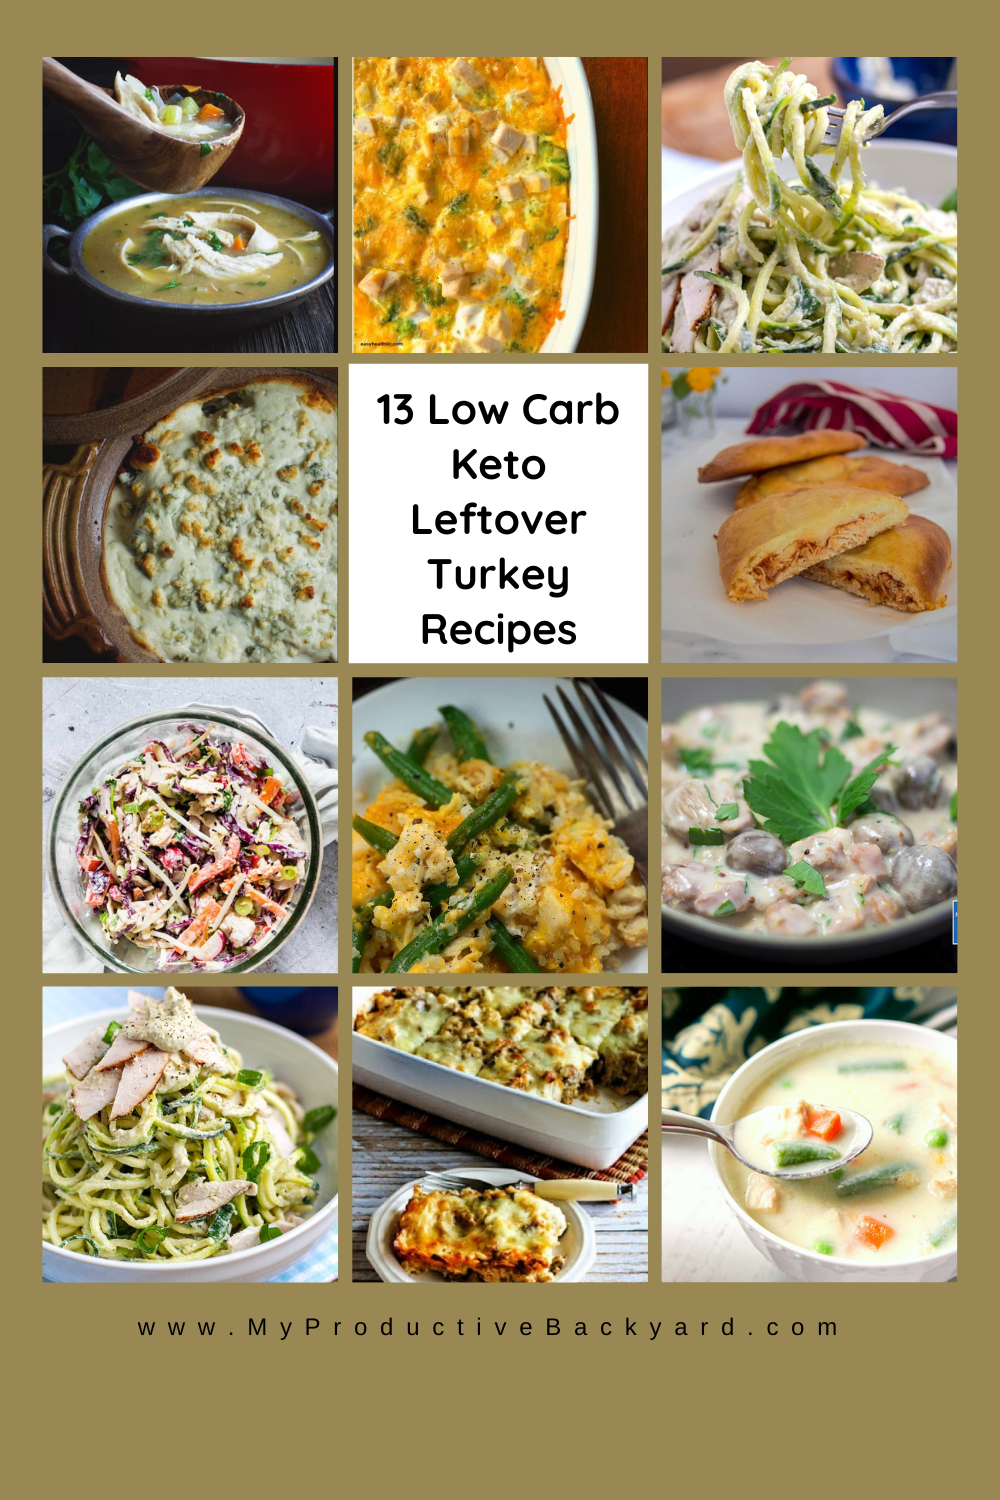 13 Low Carb Keto Leftover Turkey Recipes - My Productive Backyard